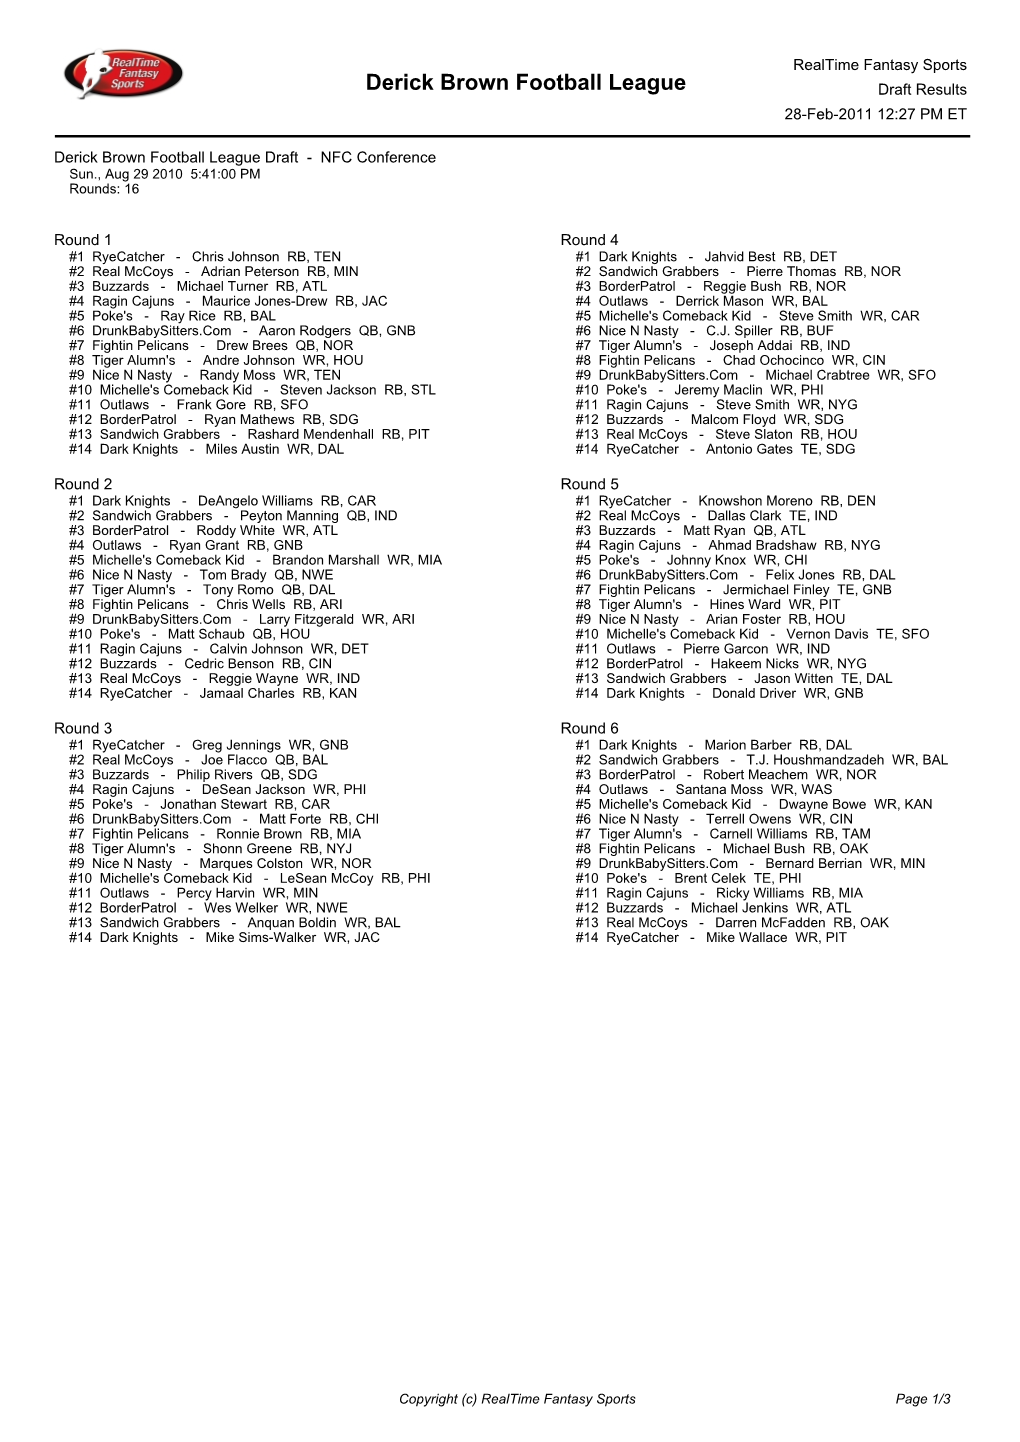 Derick Brown Football League Draft Results 28-Feb-2011 12:27 PM ET